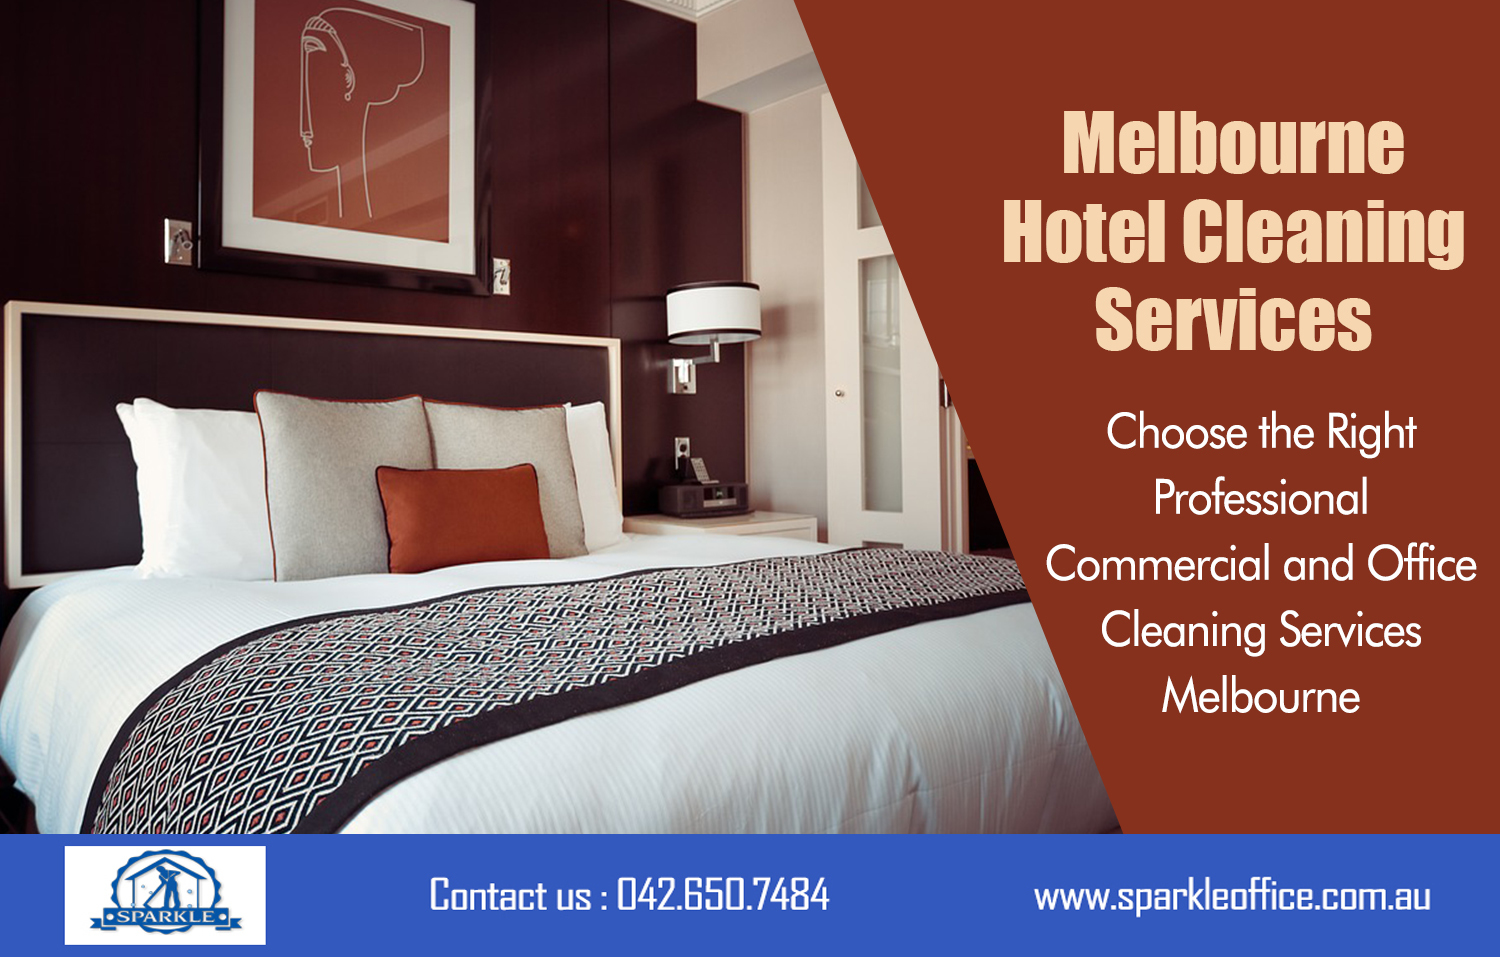 Melbourne Hotel Cleaning Services| Call Us - 042 650 7484  | sparkleoffice.com.au